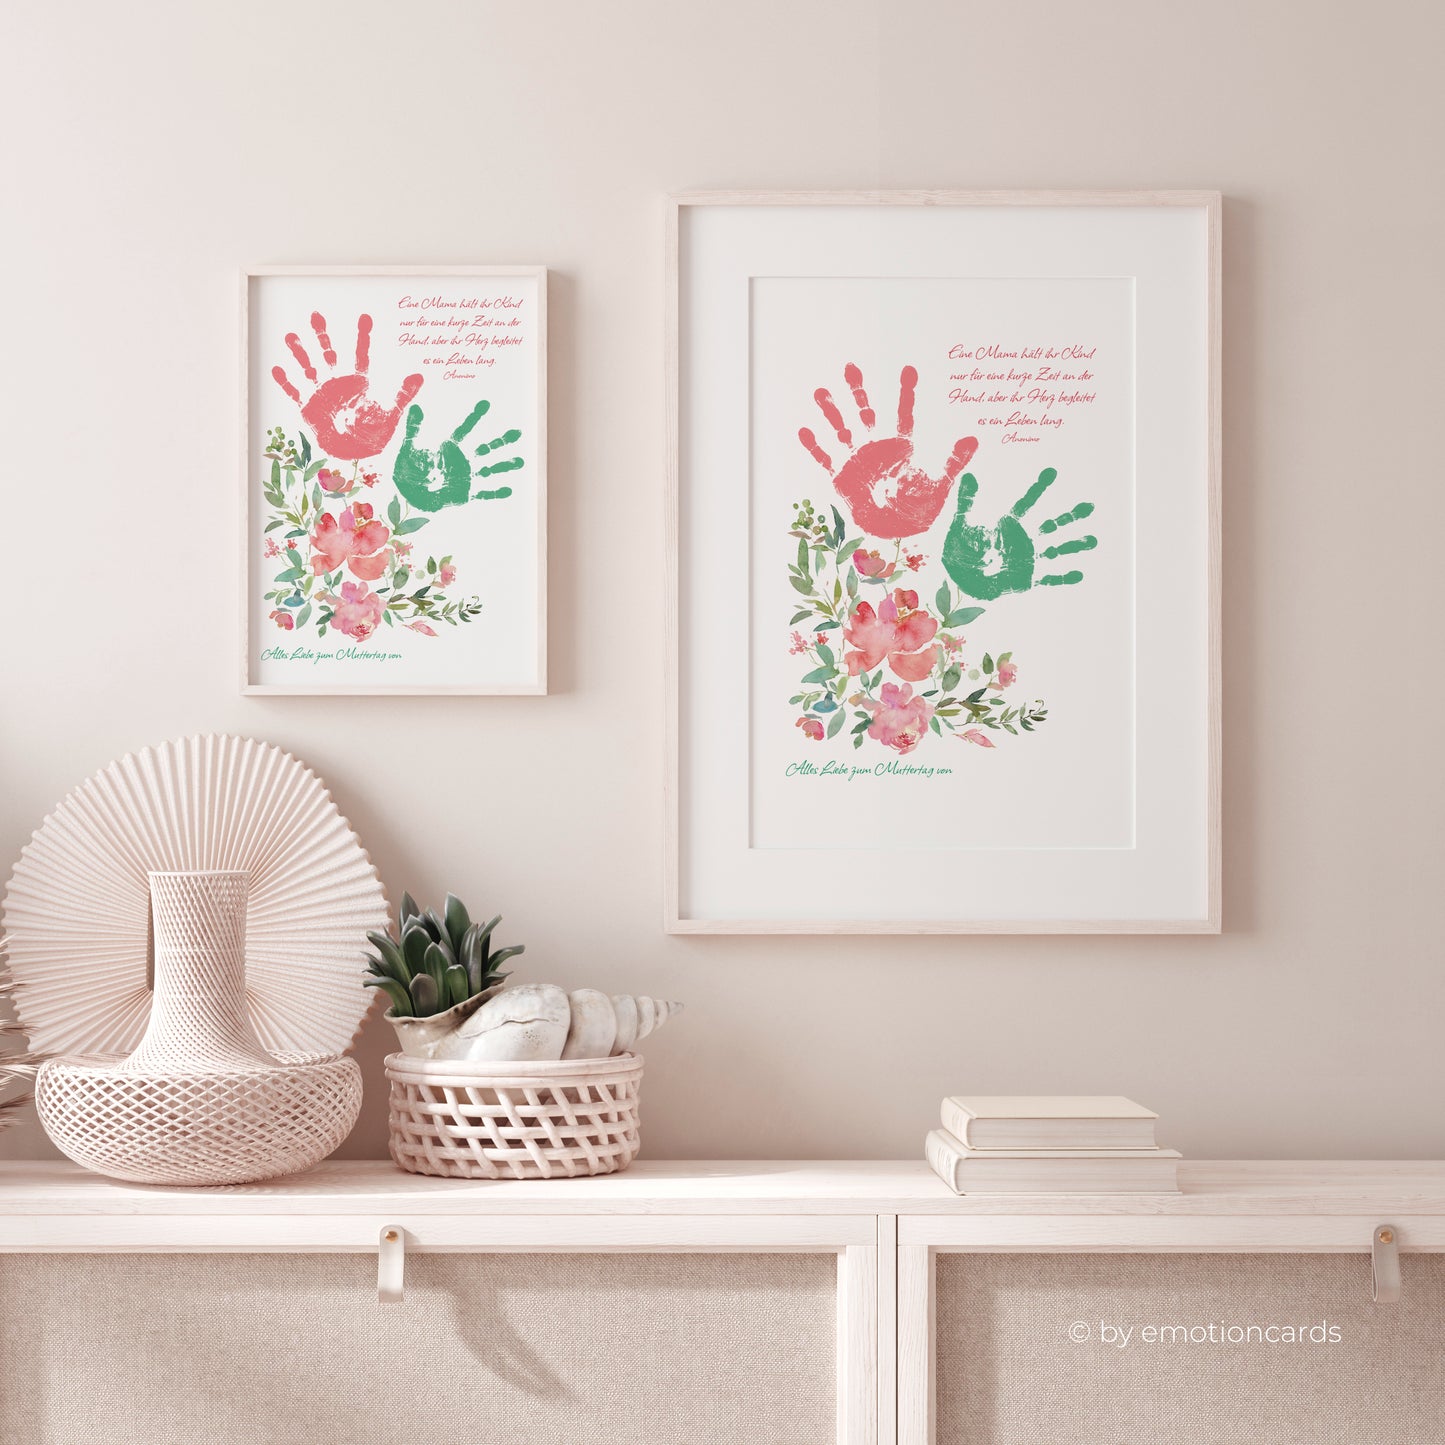 DIY Handabdruck zum Muttertag | Pastell Blumen rosa & mint